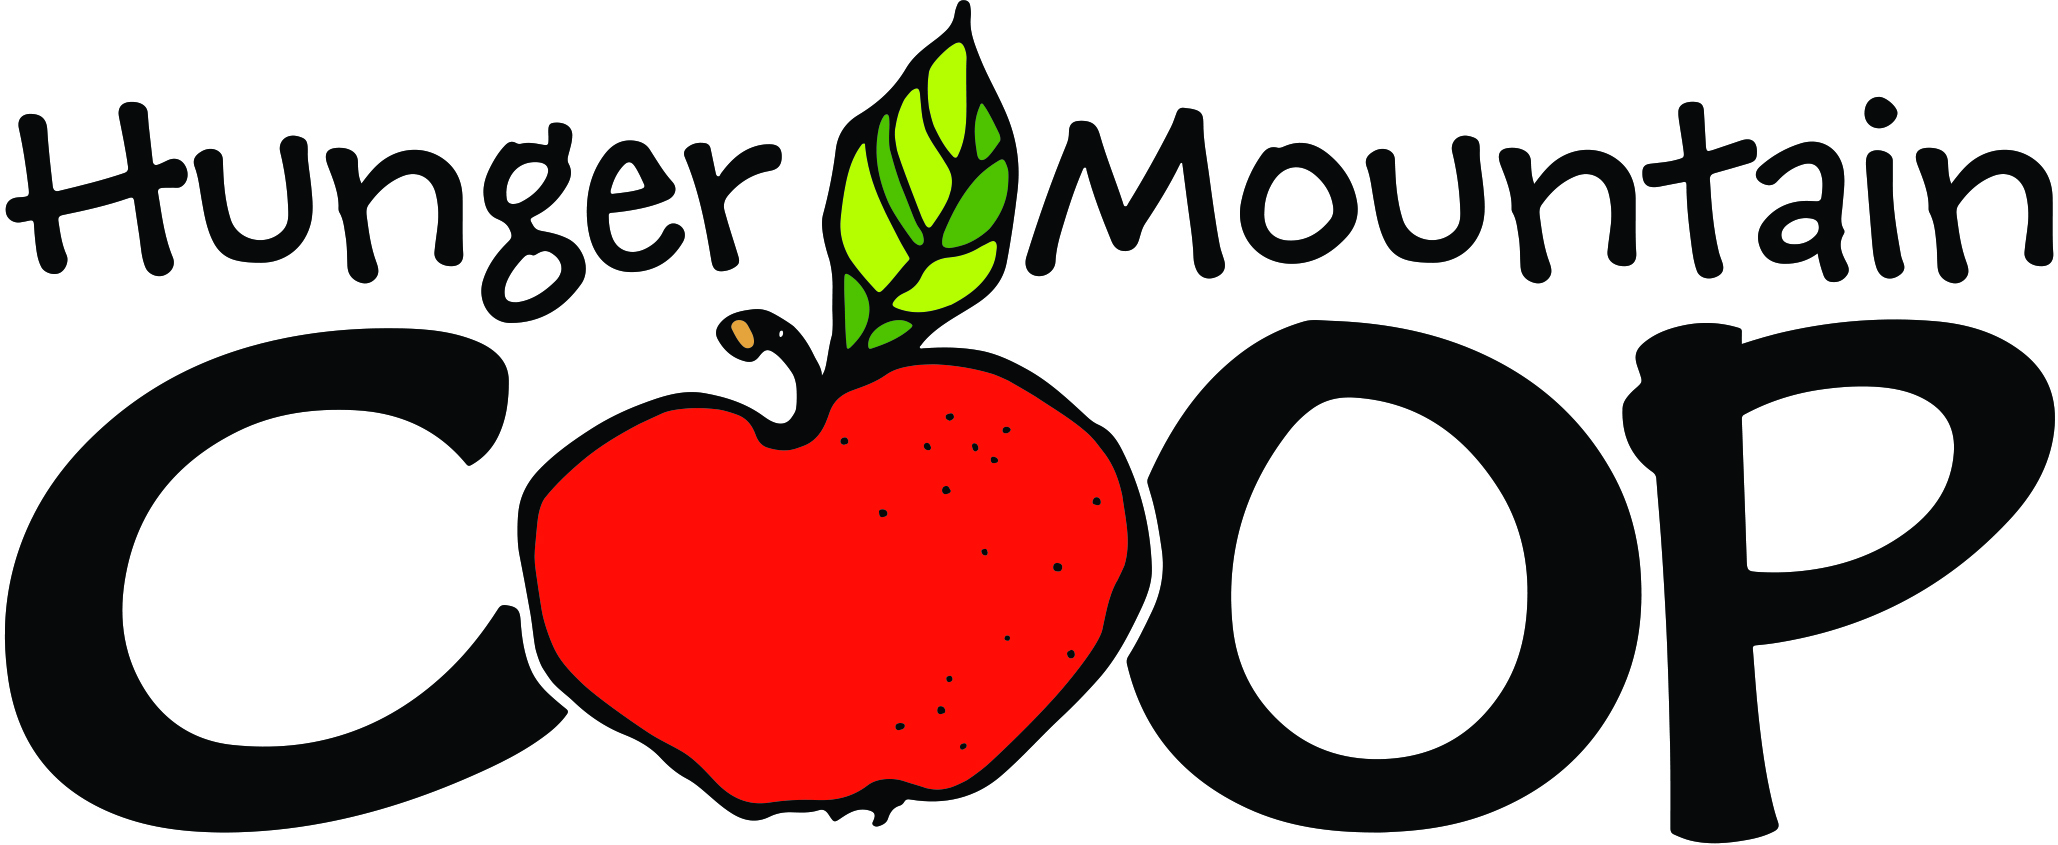 Hunger Mountain Co-op logo